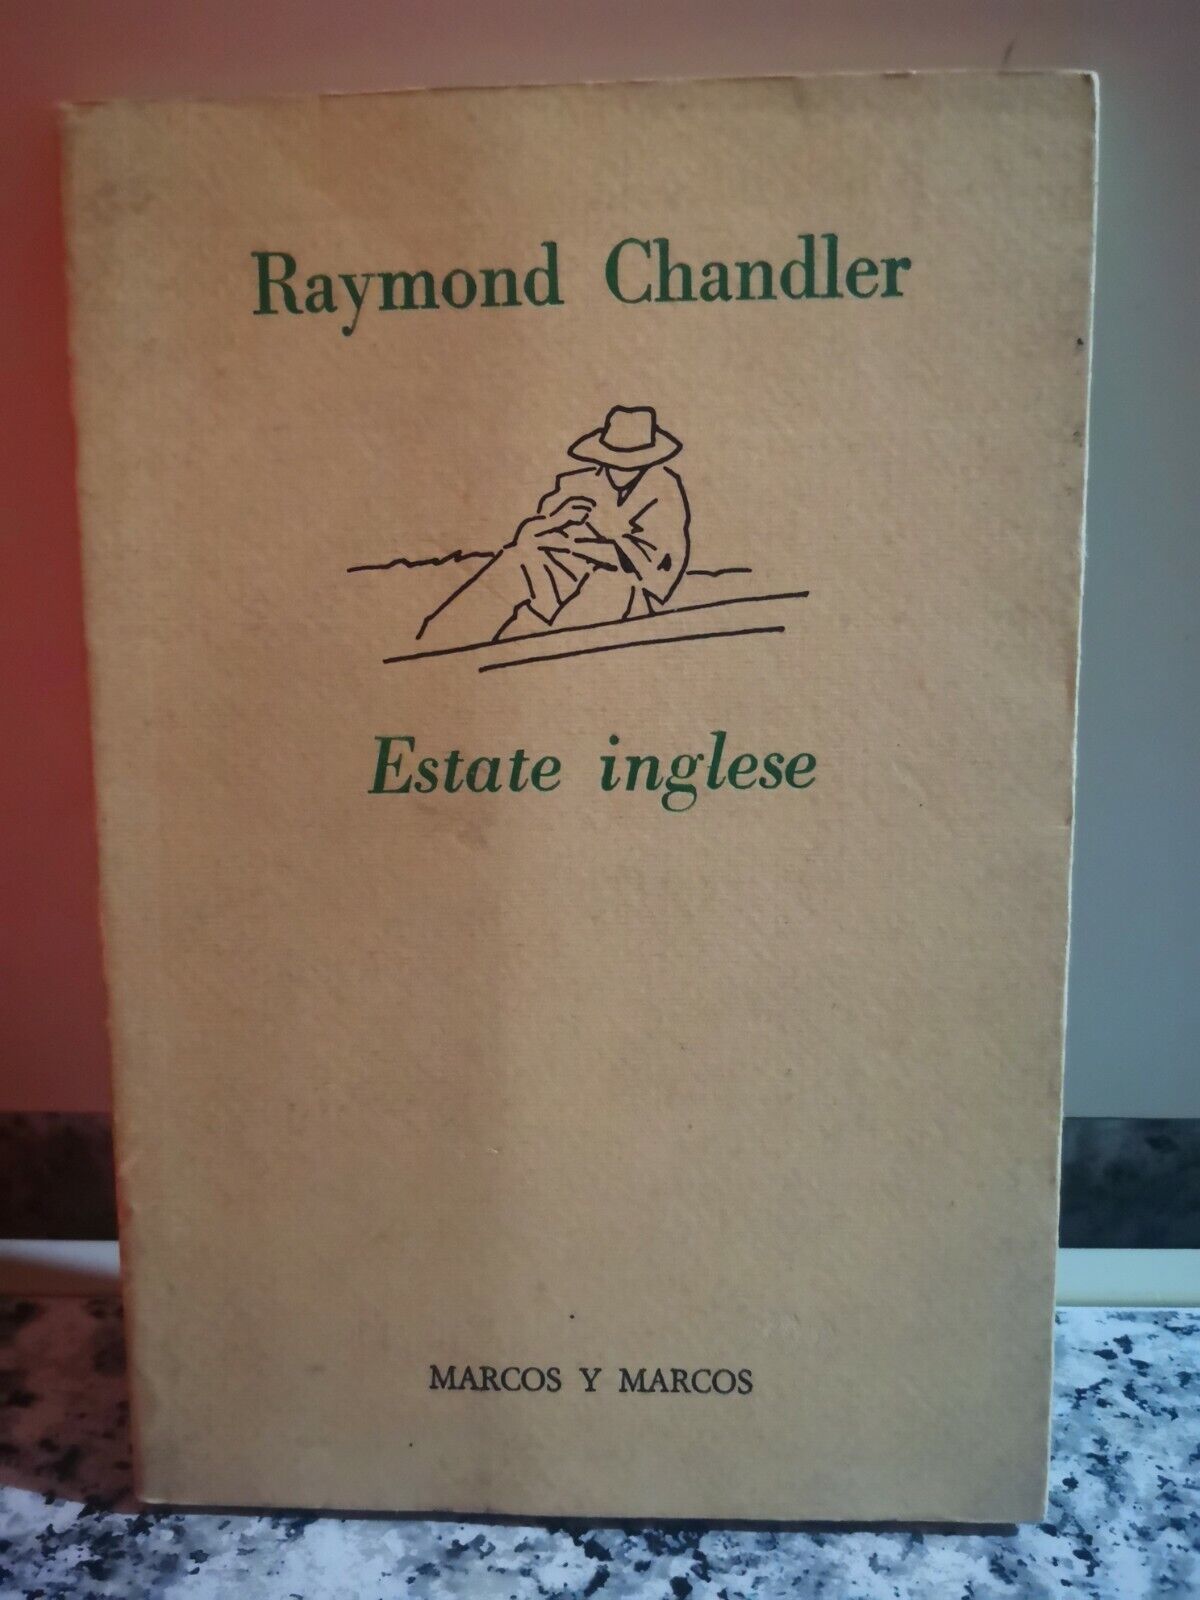  Estate inglese di Raymond Chandler,  1989,  Marcos Y Marcos - F